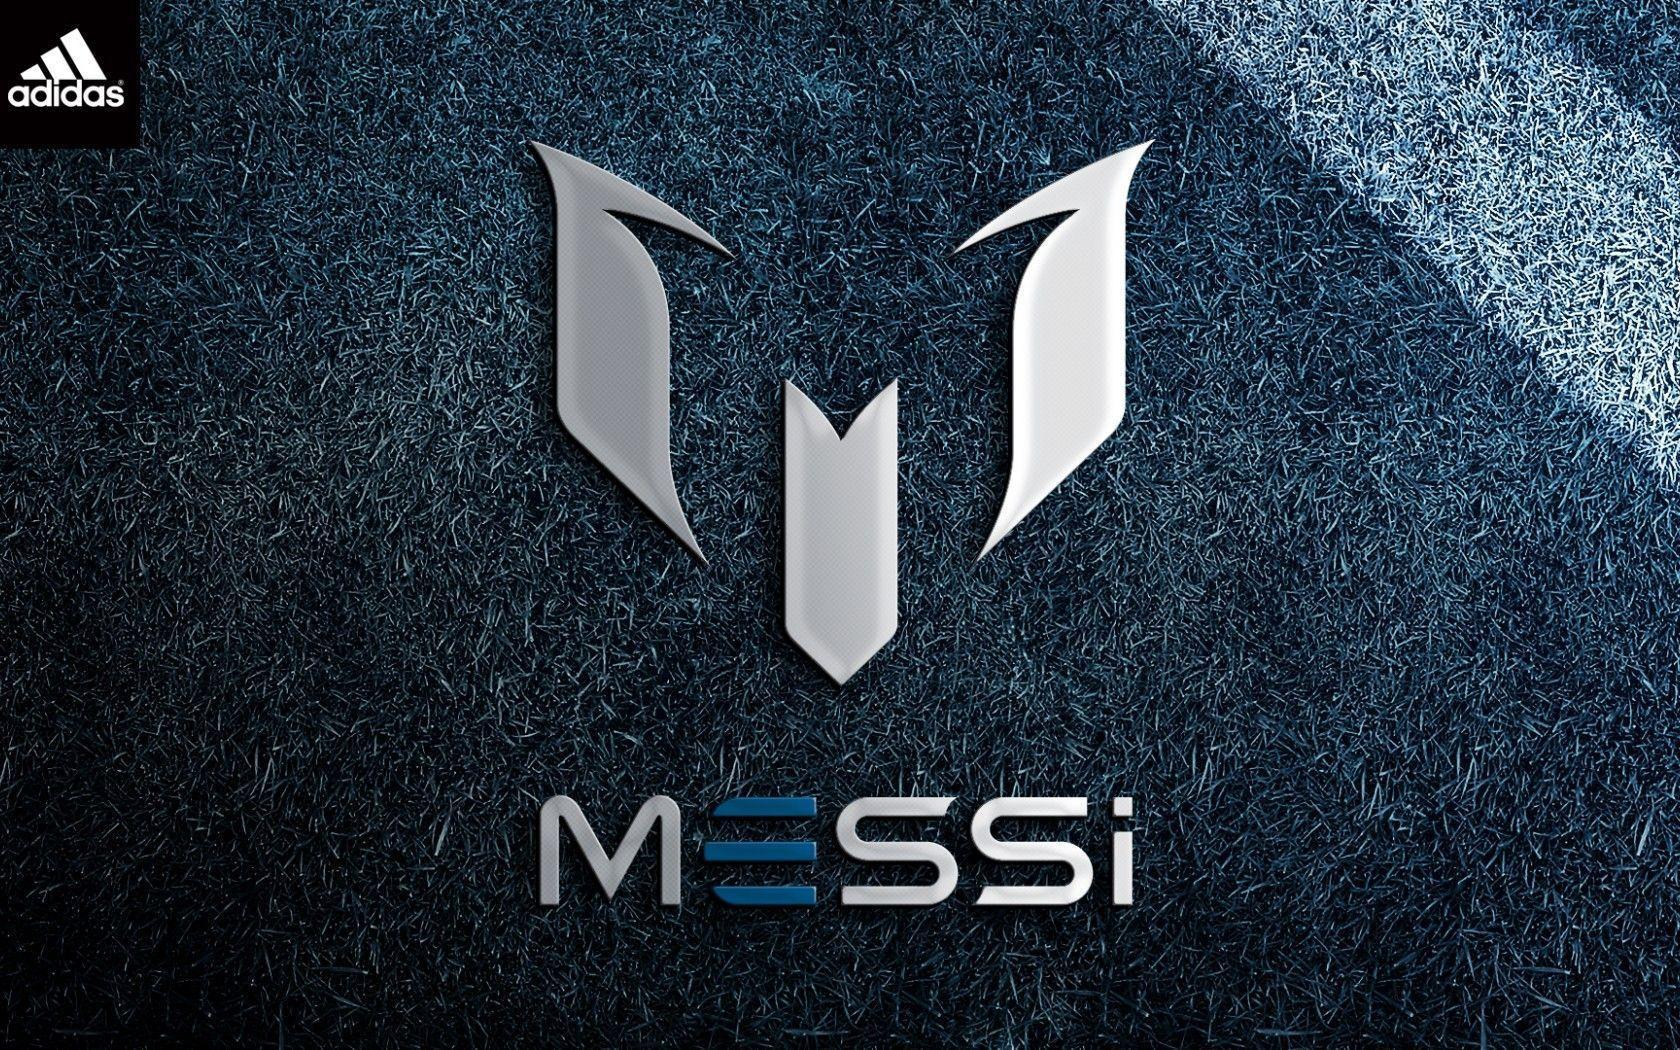 Messi And Adidas Logo Wallpaper. Widescreen Wallpaper. High